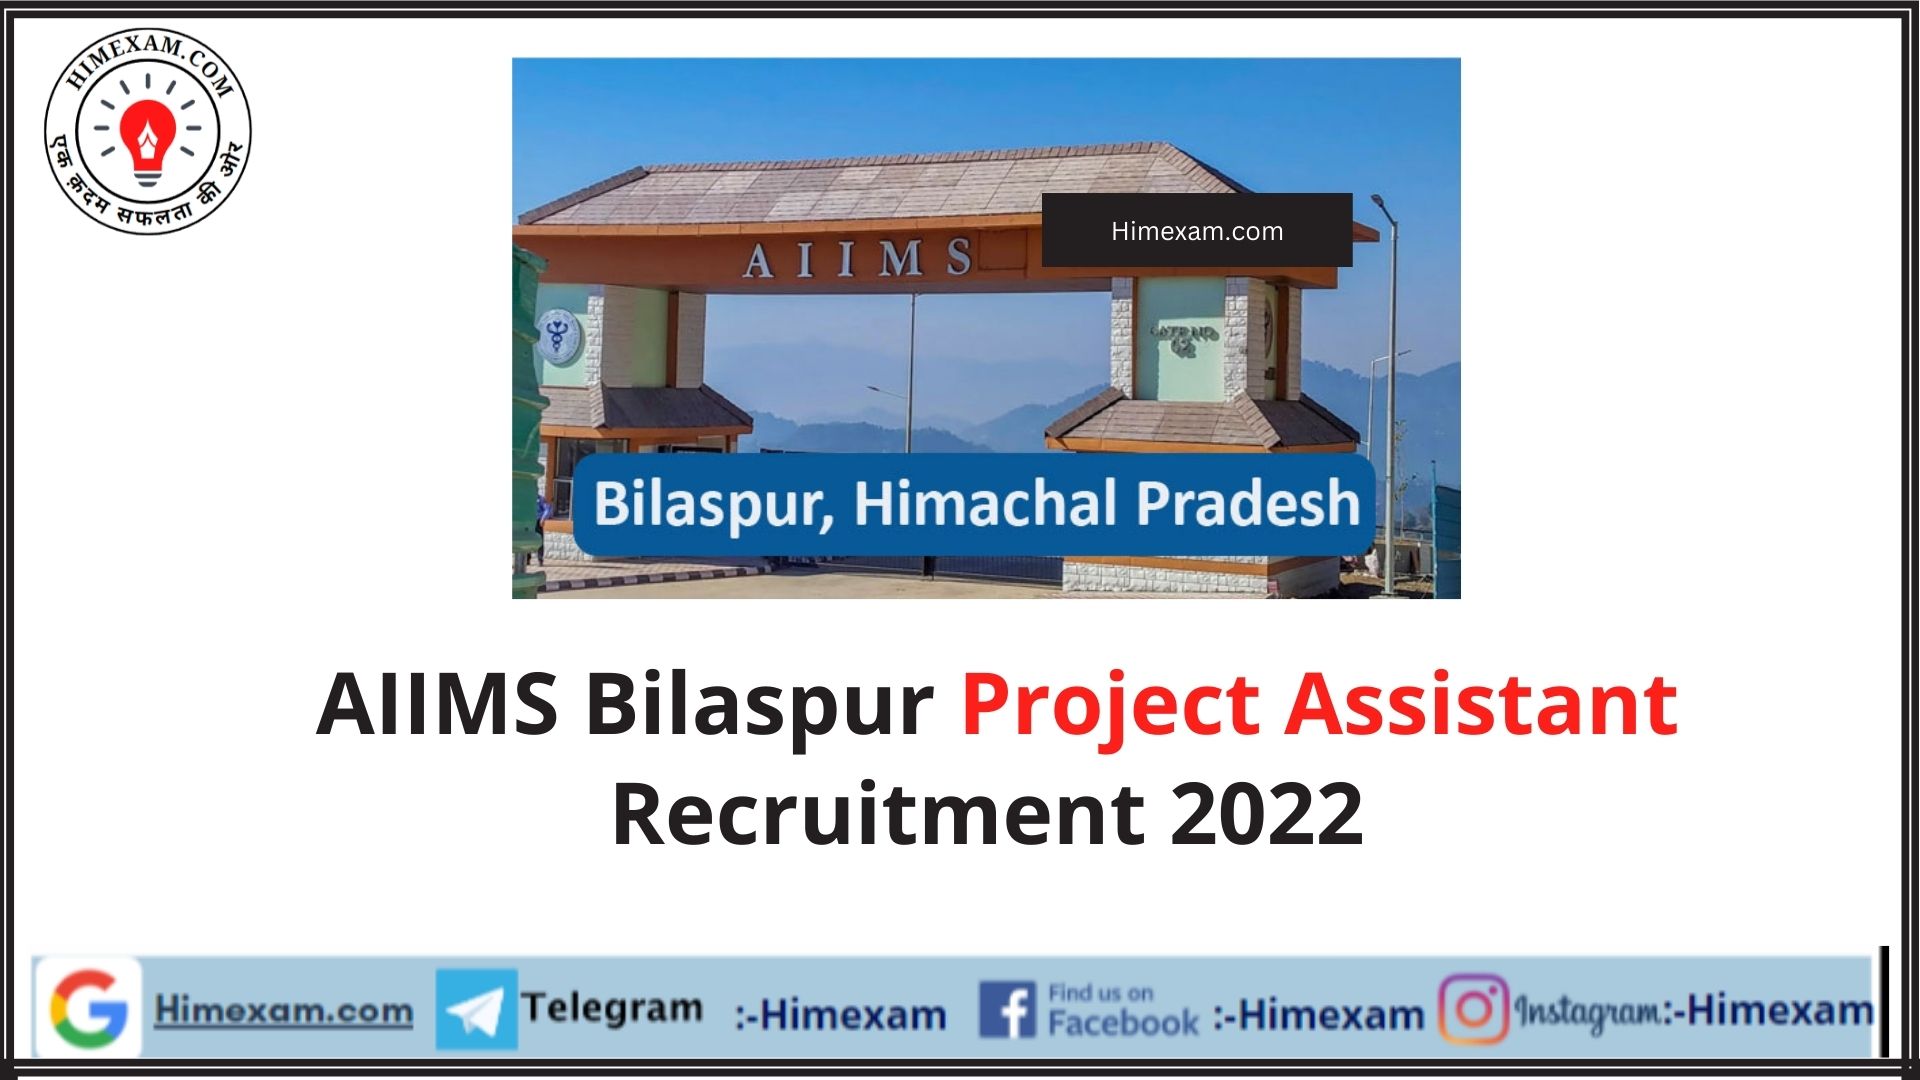 AIIMS Bilaspur Project Assistant Recruitment 2022